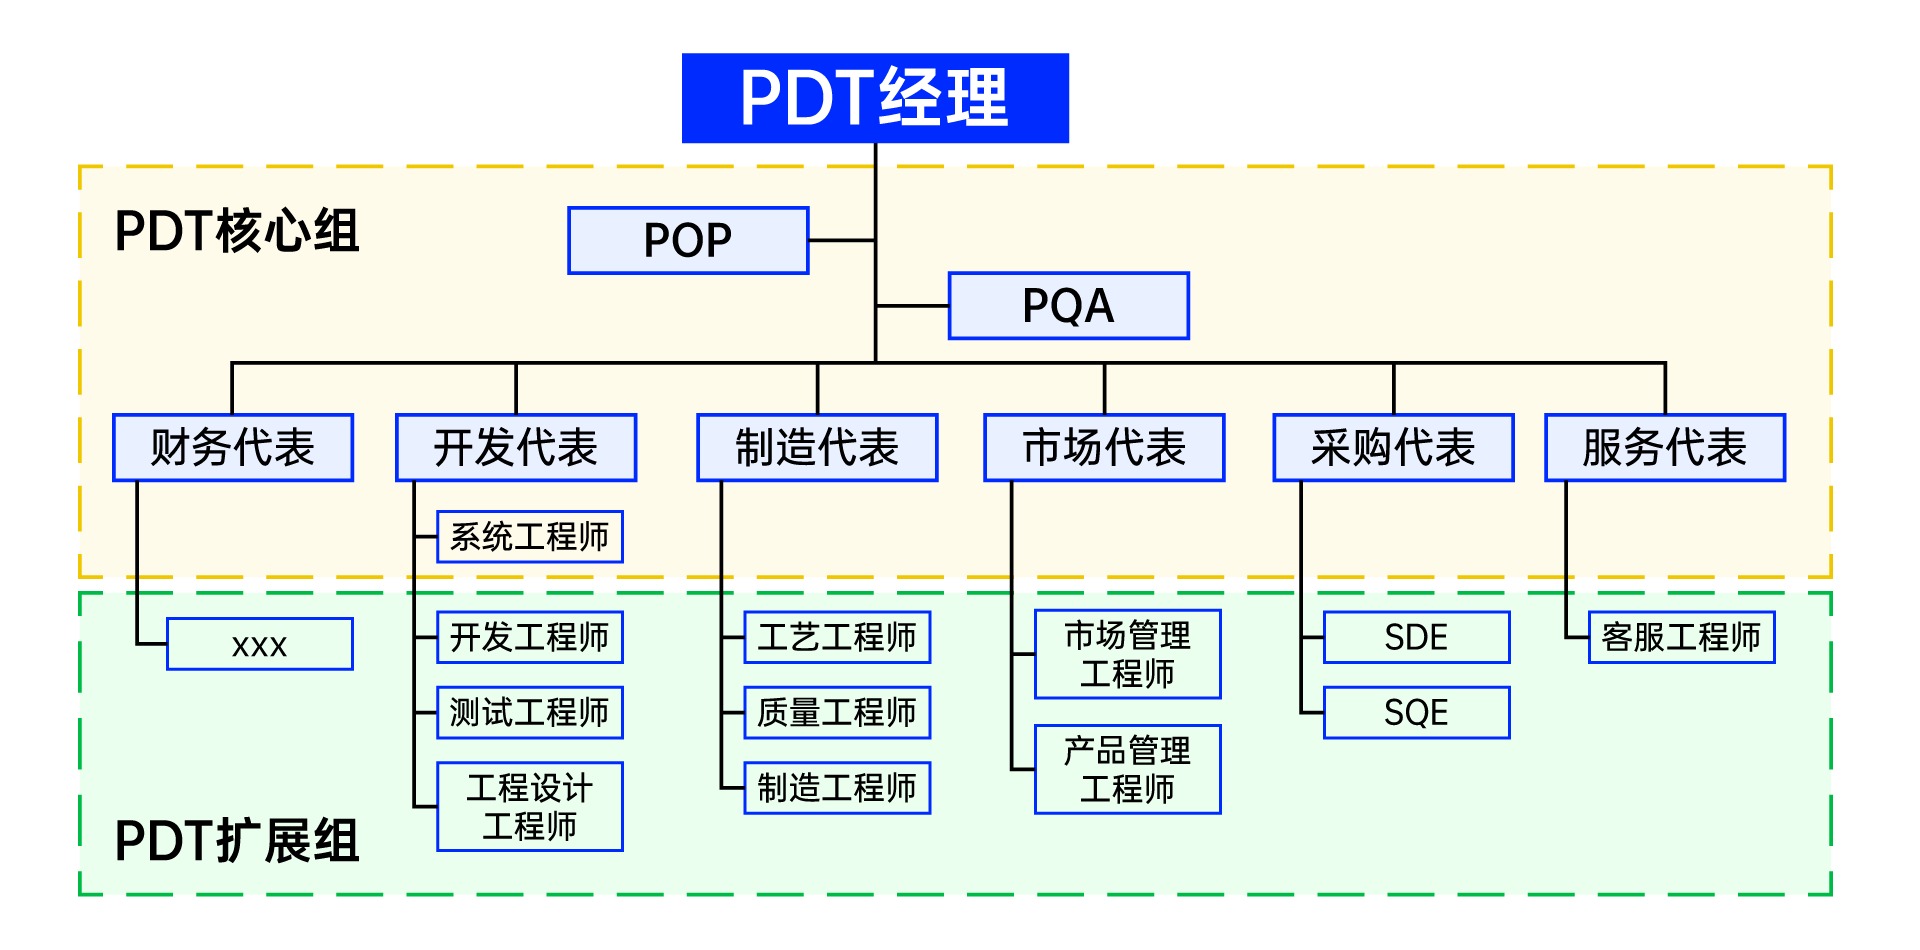 IPD中，PDT团队的结构